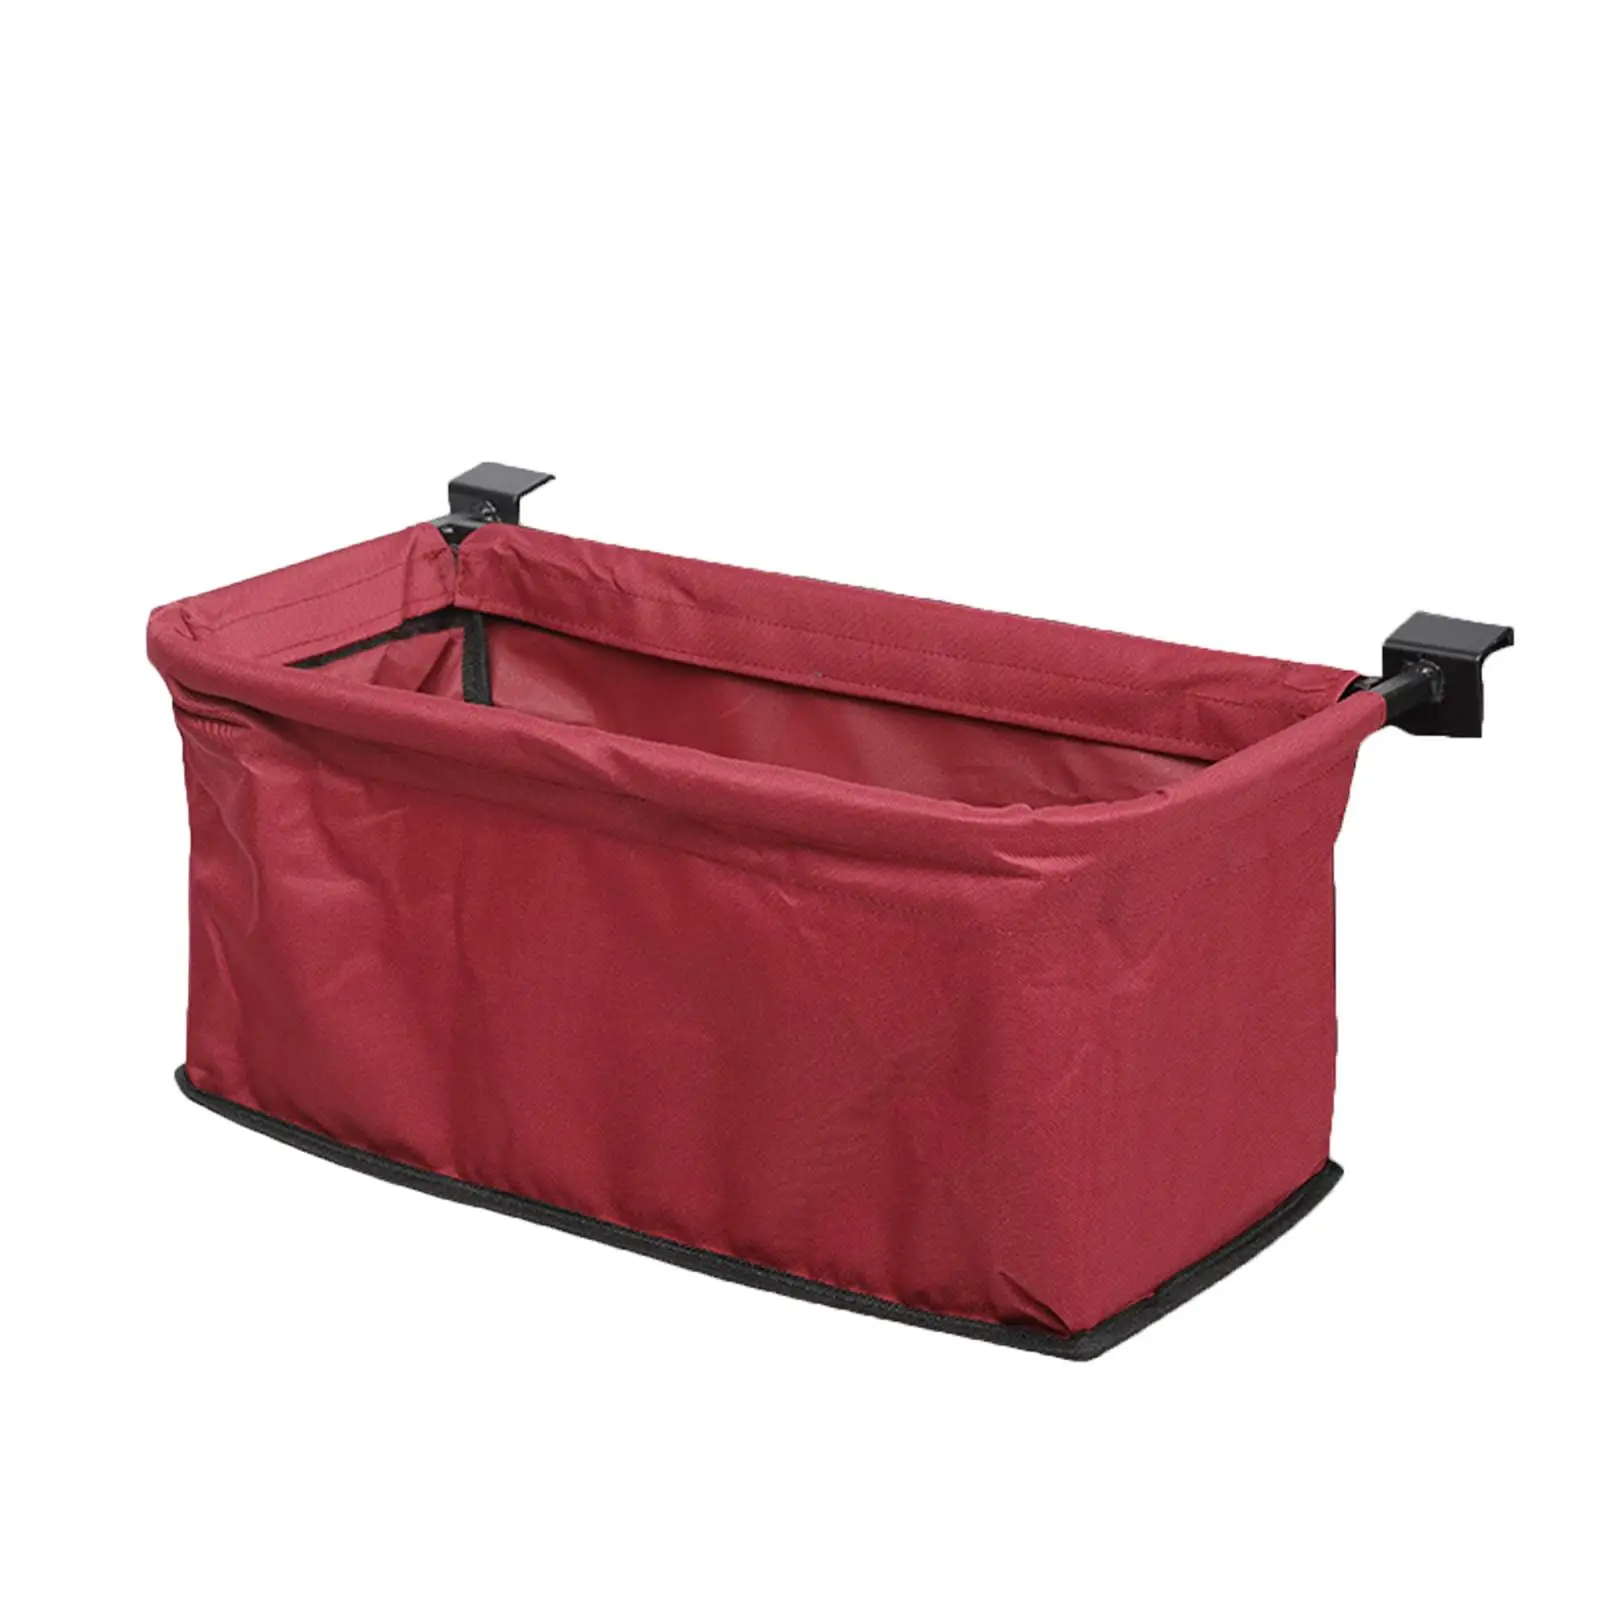 Tail Bag for Push-Pull Wagon, Car Basket Tail Bag for Wagon Cart, Shopping